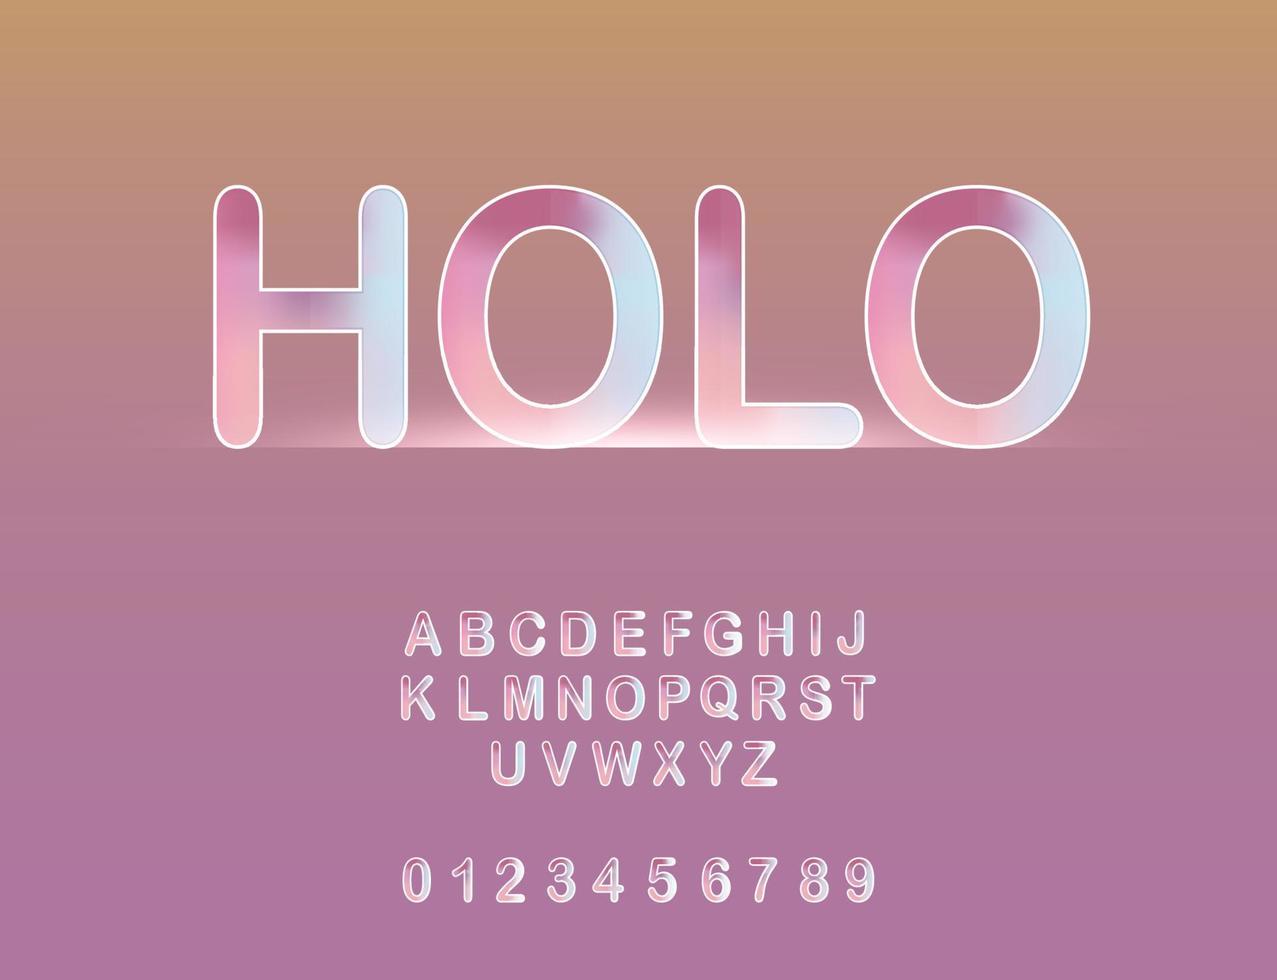 hologram alfabetet teckensnitt vektor set